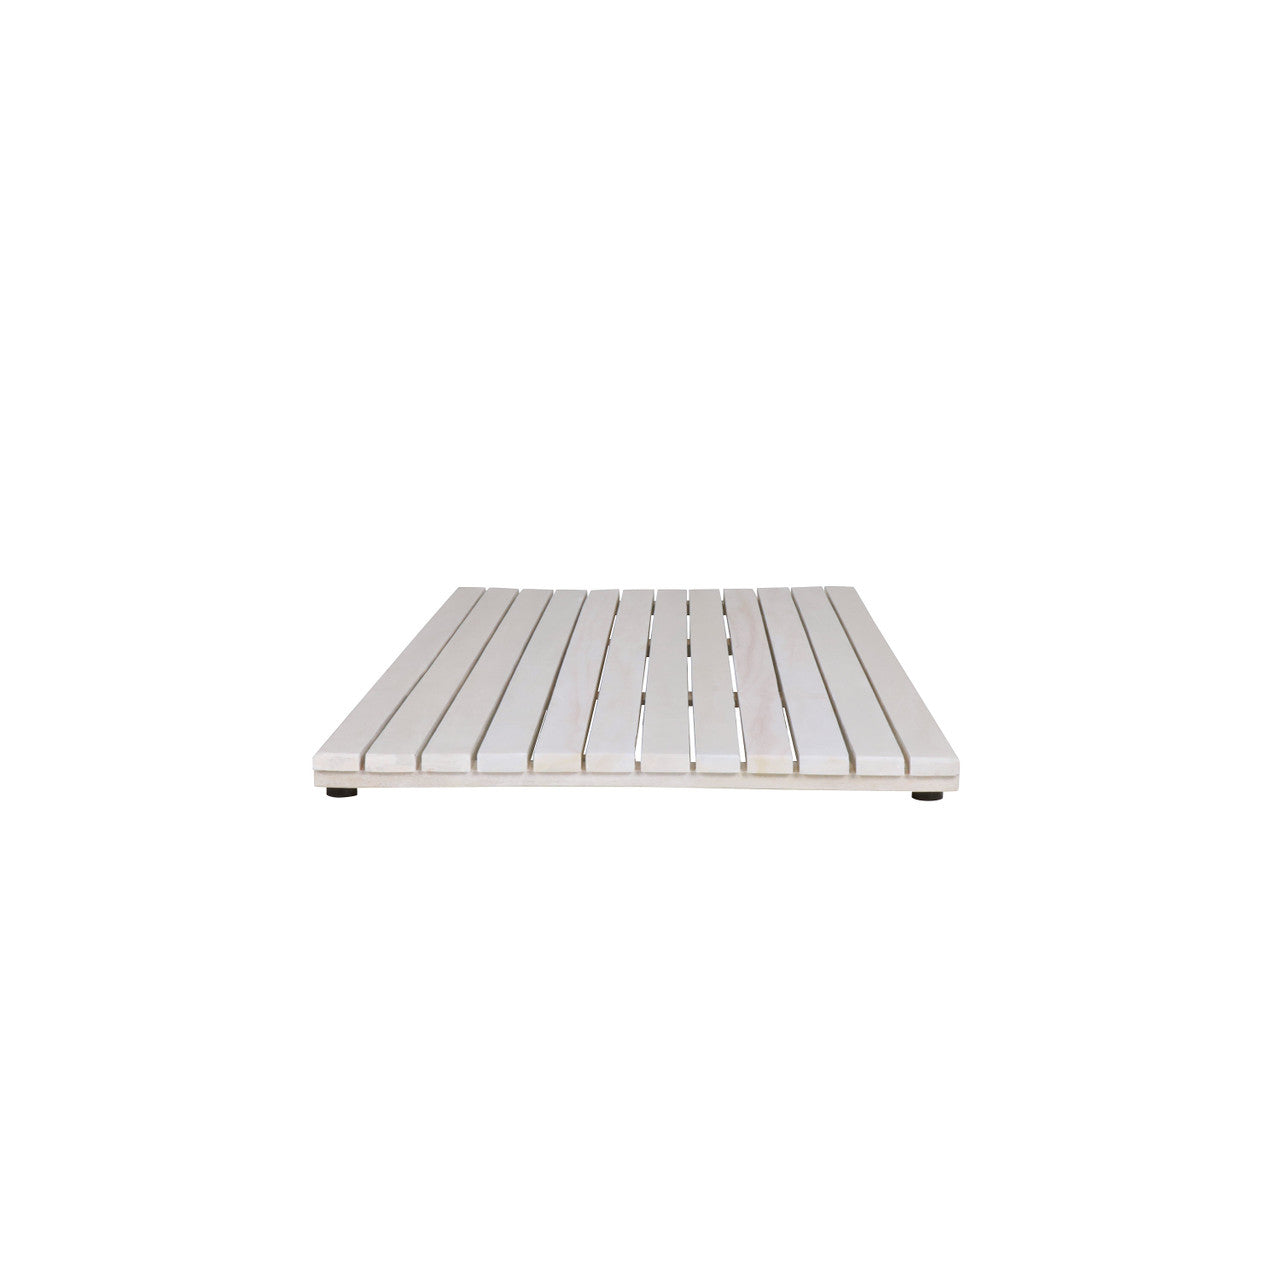 CoastalVogue® Eleganto® 40” Floor Mat in a White Driftwood Finish